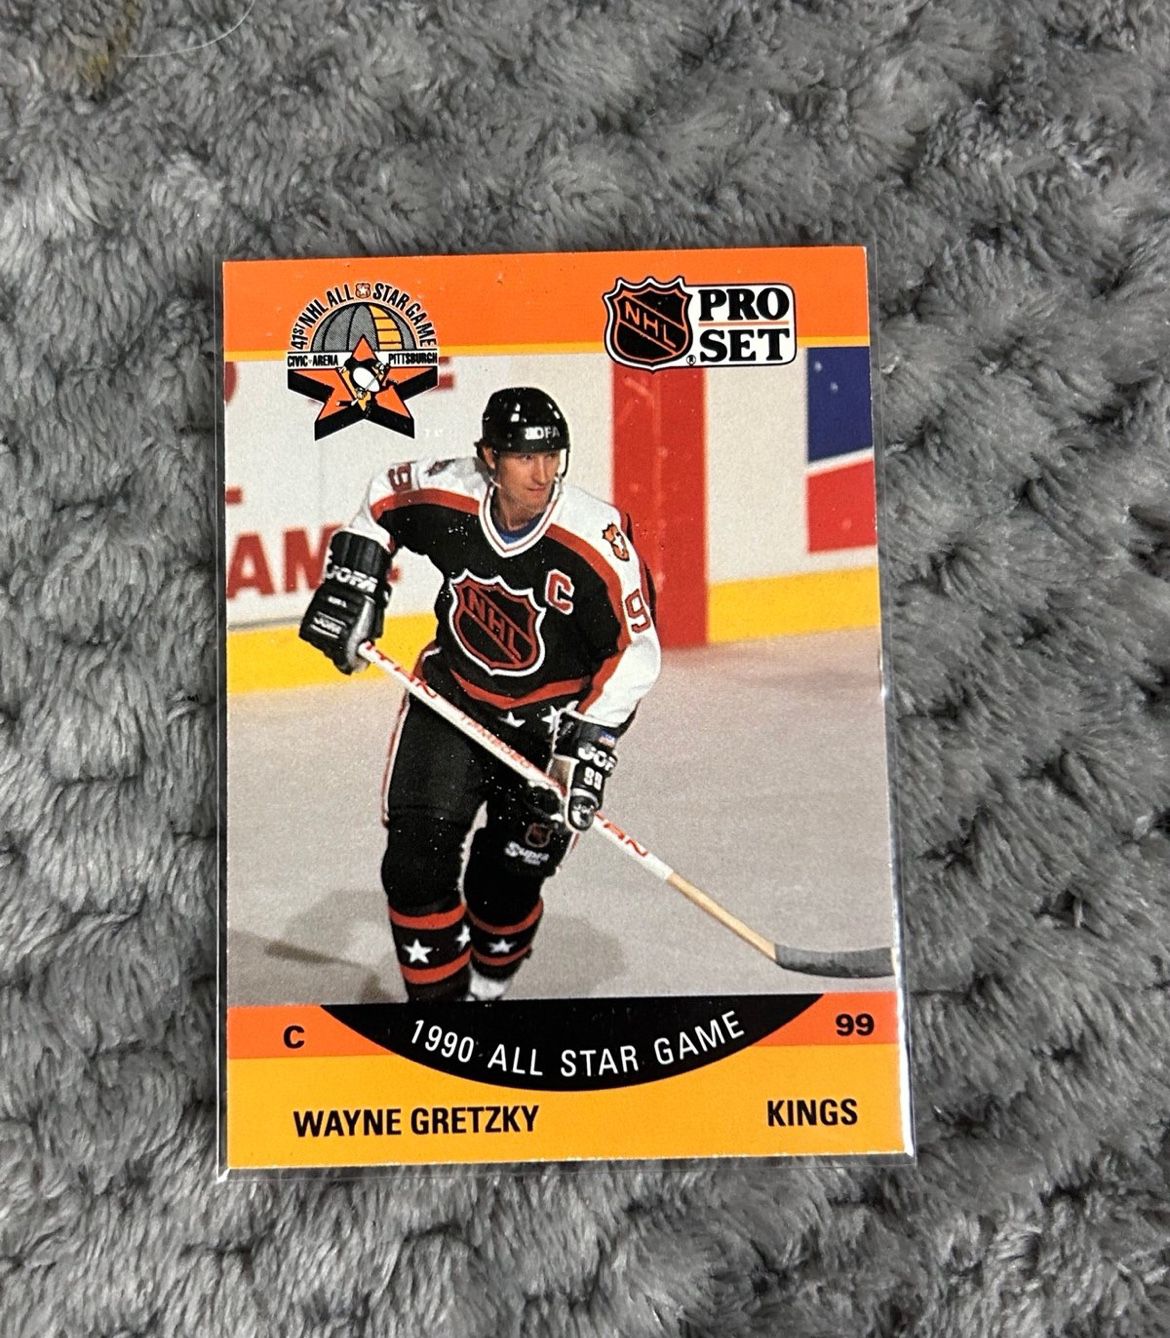 1990 Wayne Gretzky Pro Set All Star Game Kings